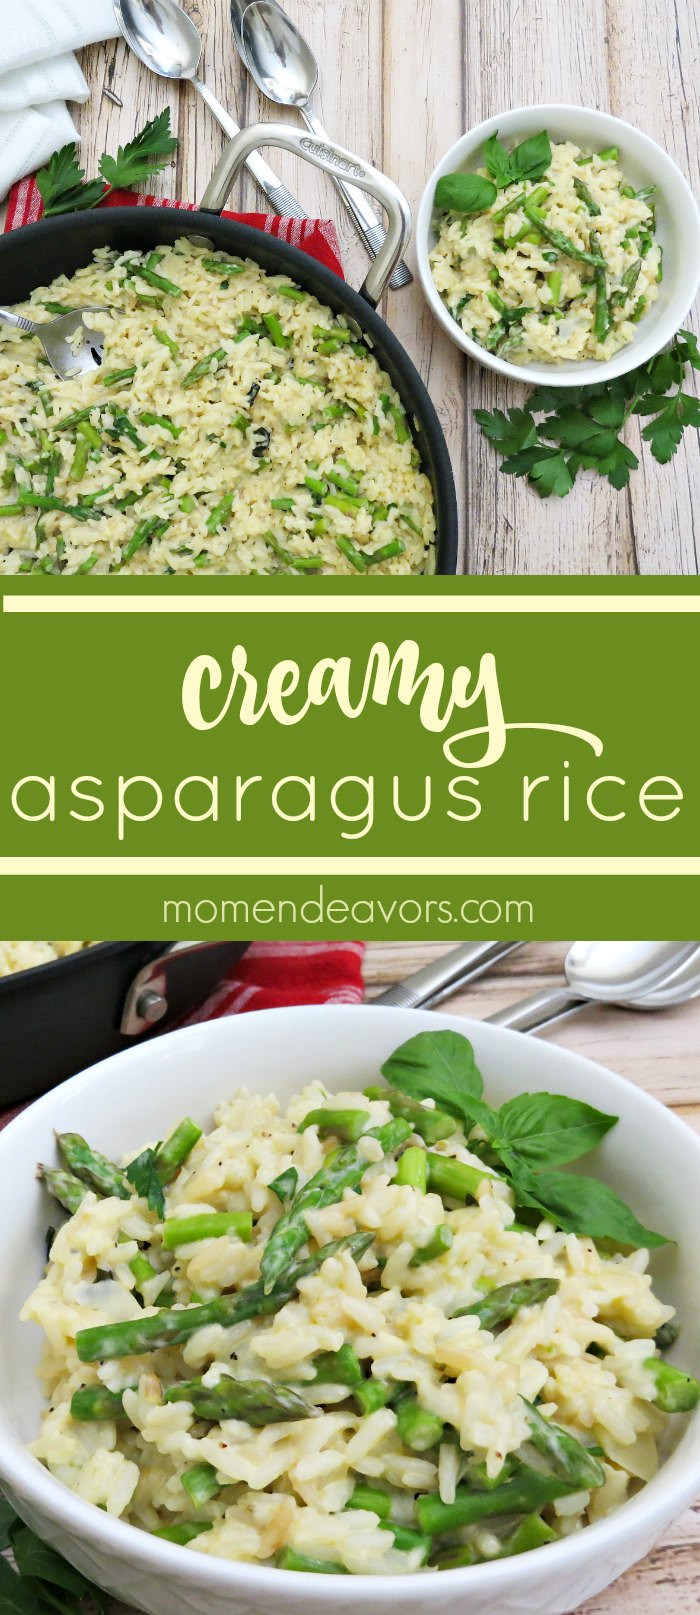 Healthy Asparagus Recipes
 e Pan Dish – Creamy Asparagus Rice